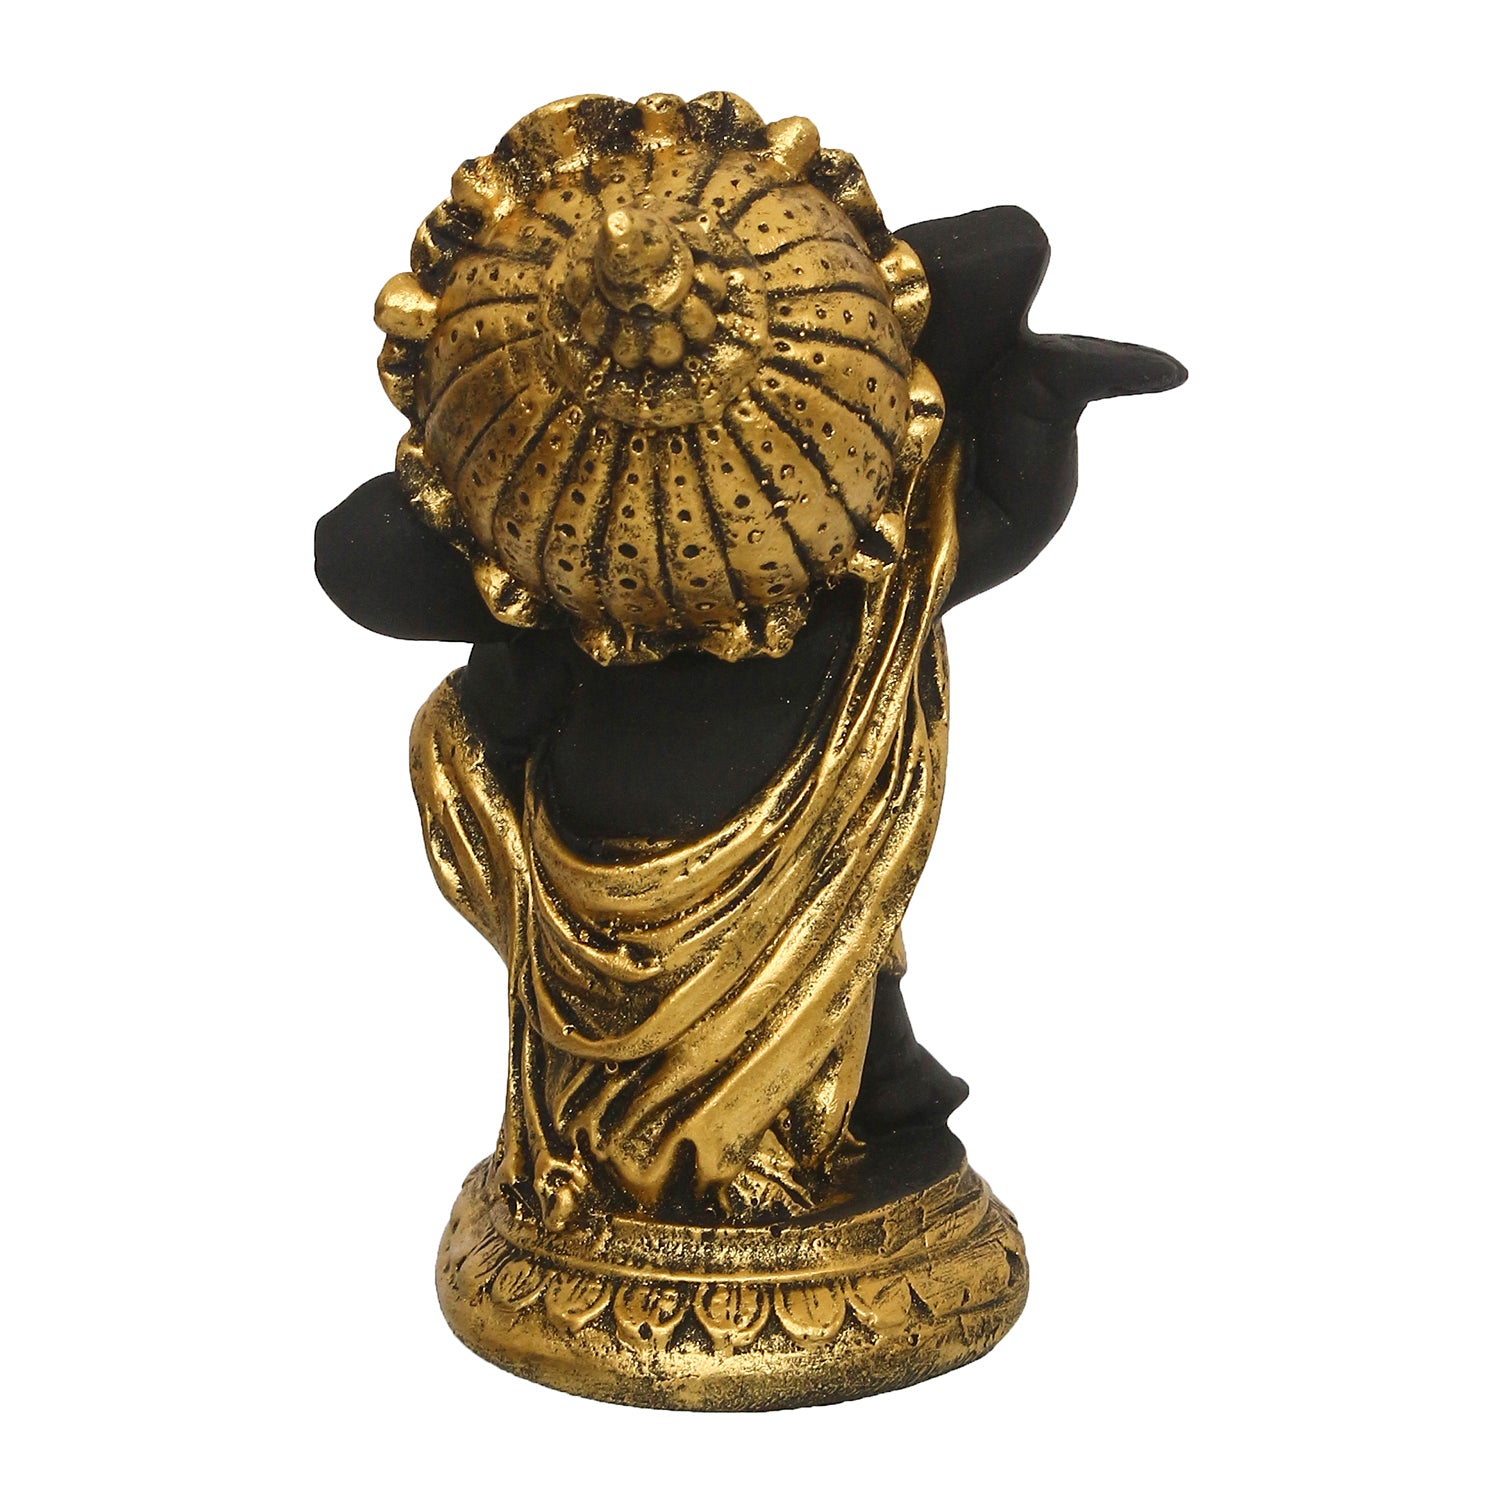 Golden And Black Lord Ganesha Idol In Dancing Avatar Decorative Showpiece 6